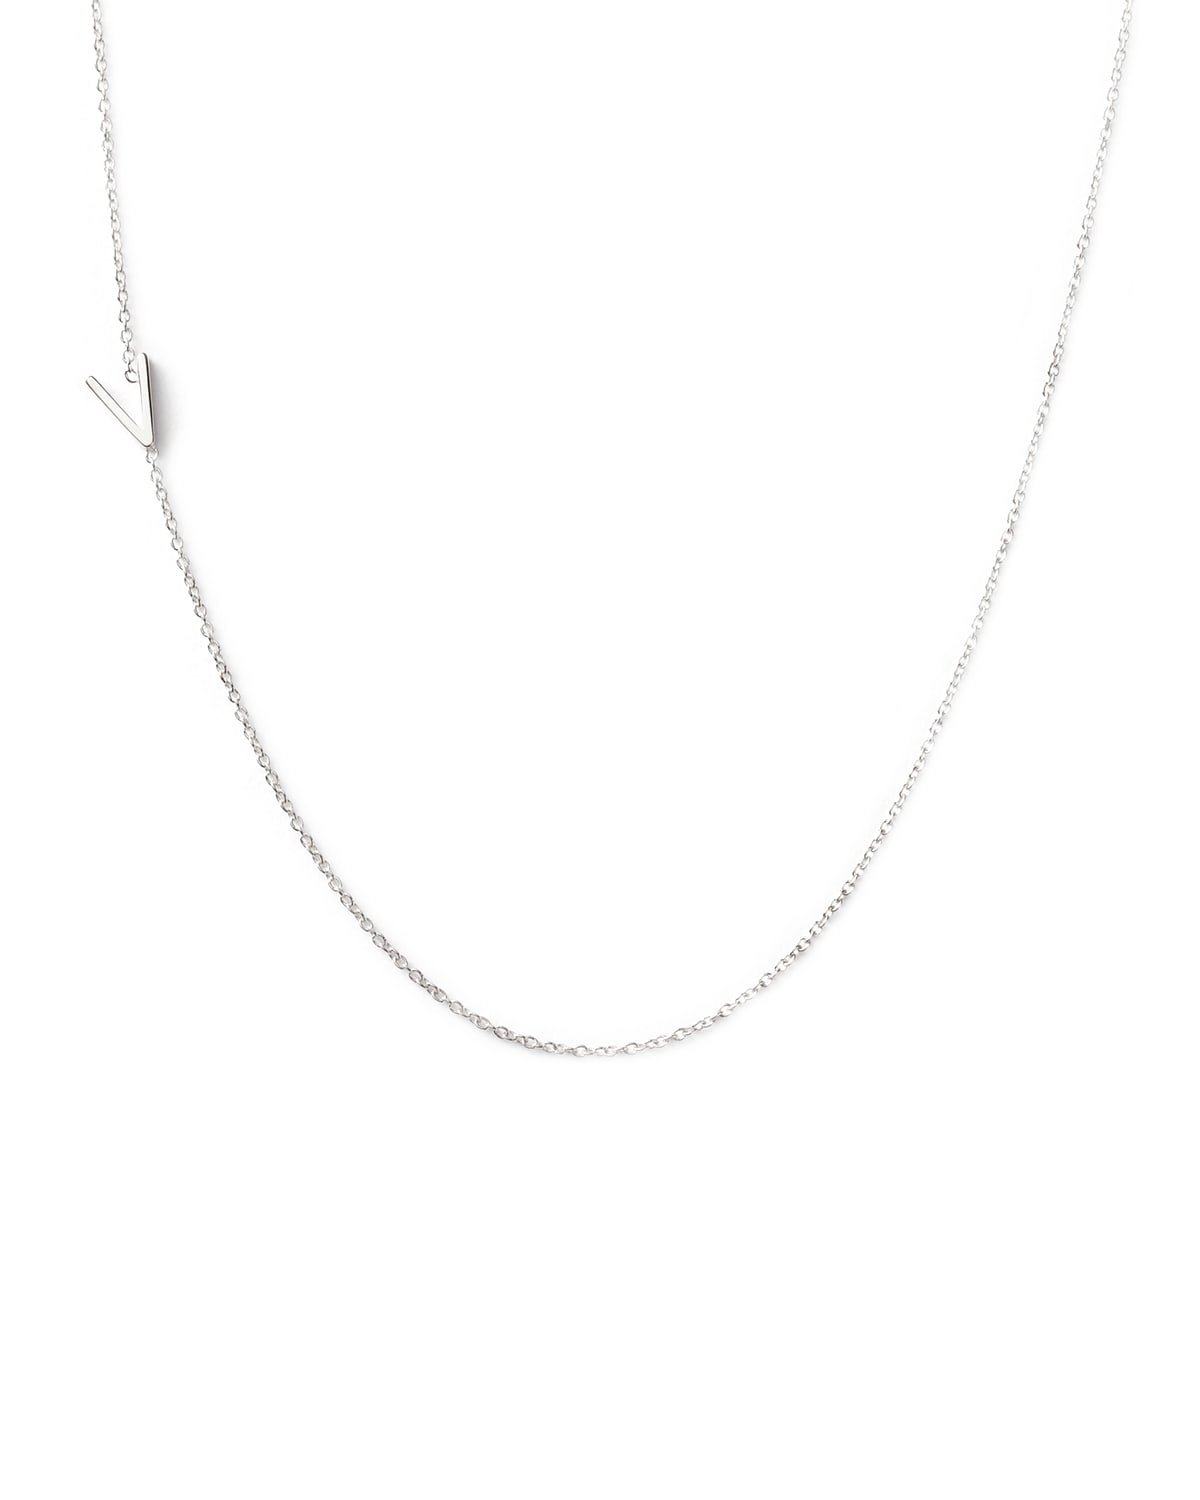 Maya Brenner Designs 14k White Gold Mini Letter Necklace In V